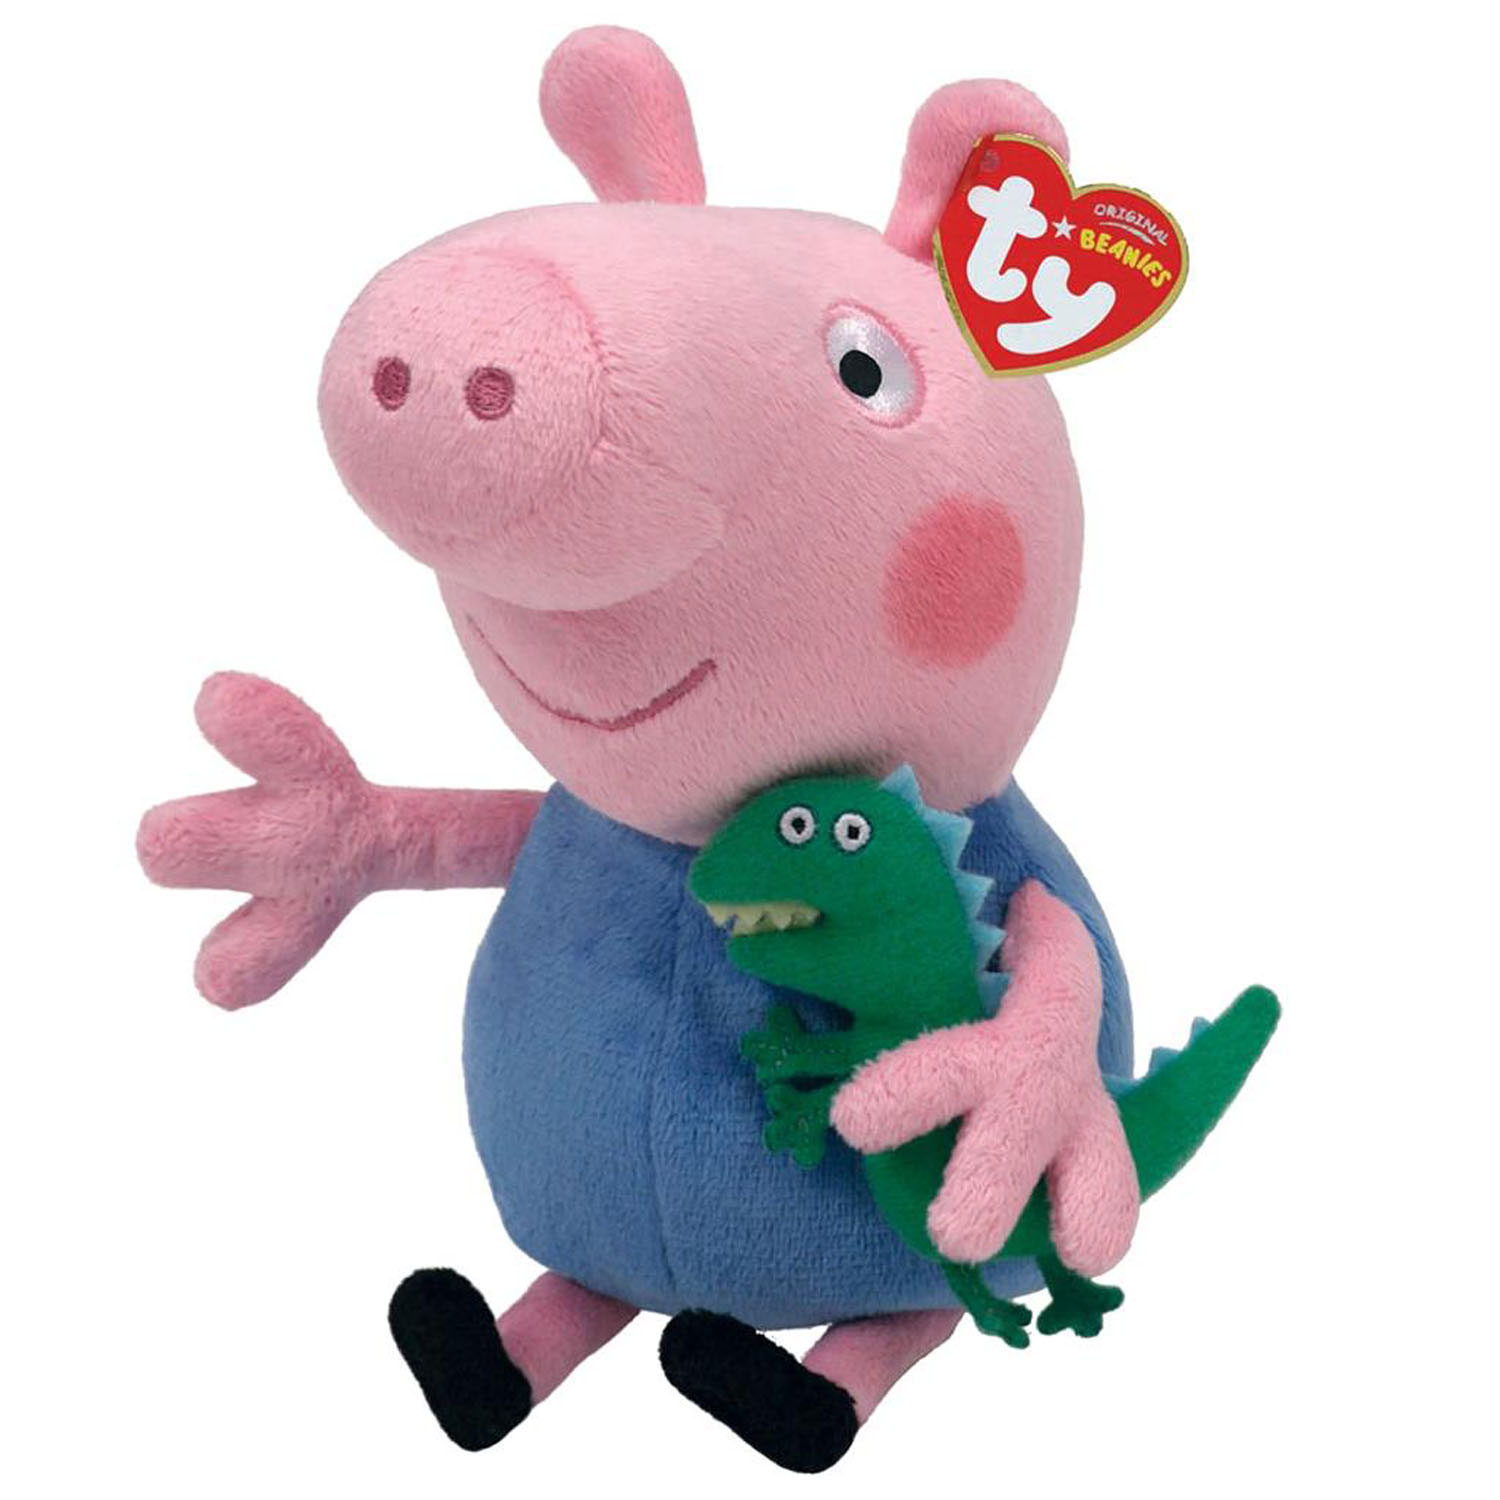 Slovenië Score Onzeker Ty Beanie Boo Plush Toy Peppa Pig George, 15cm | Thimble Toys